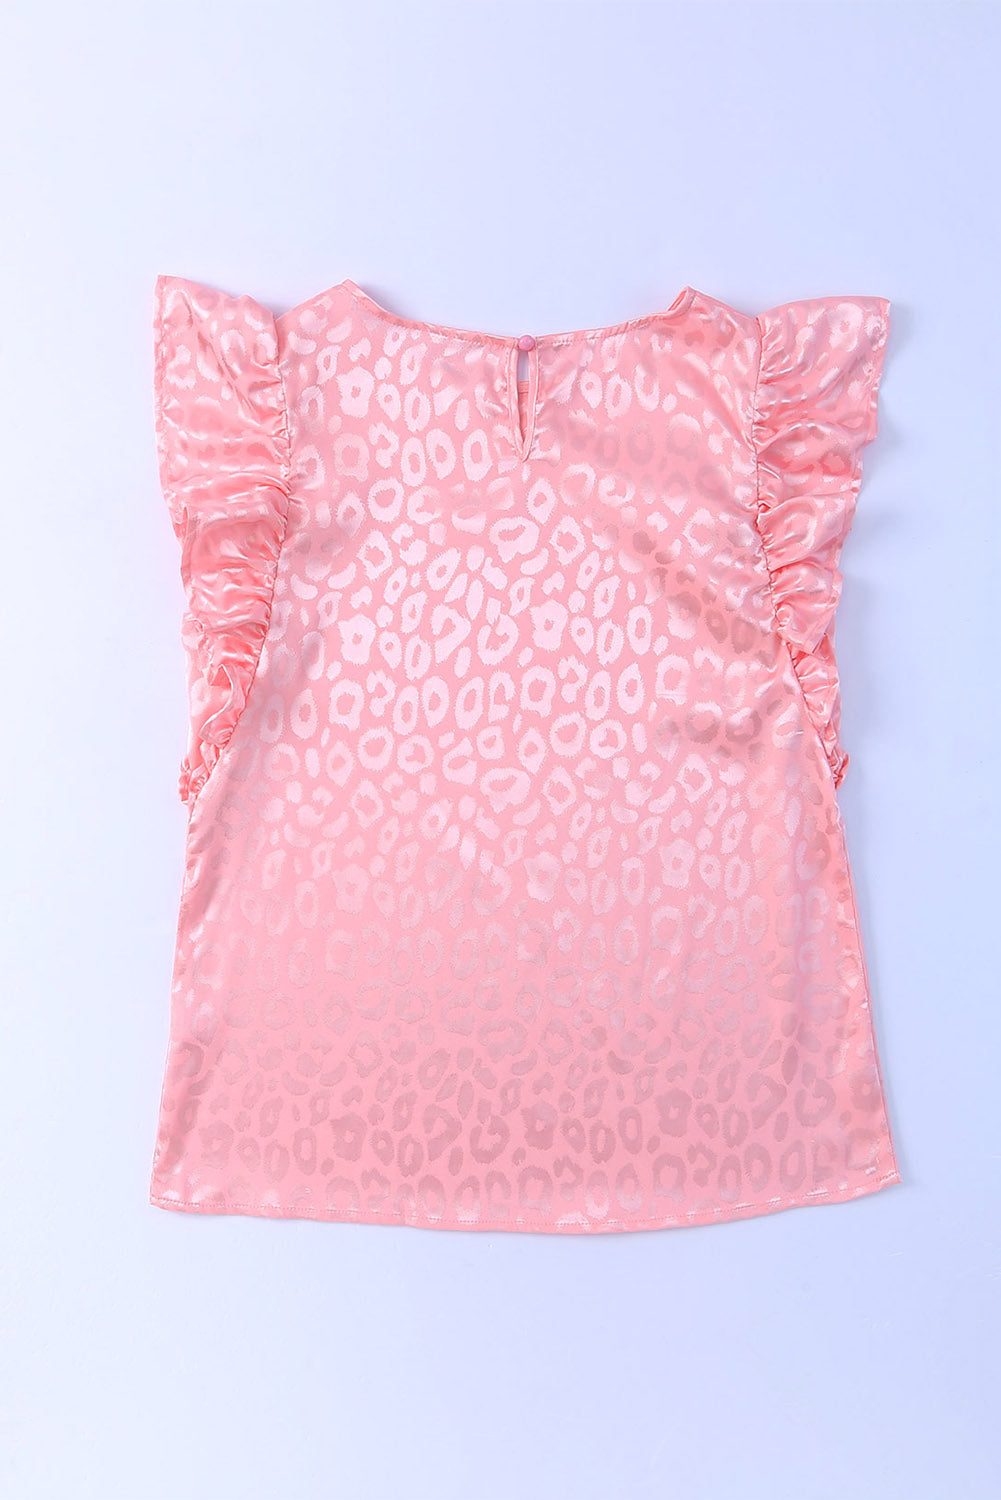 Rosy Satin Jacquard Sleeveless A-Line Leopard Print Dress